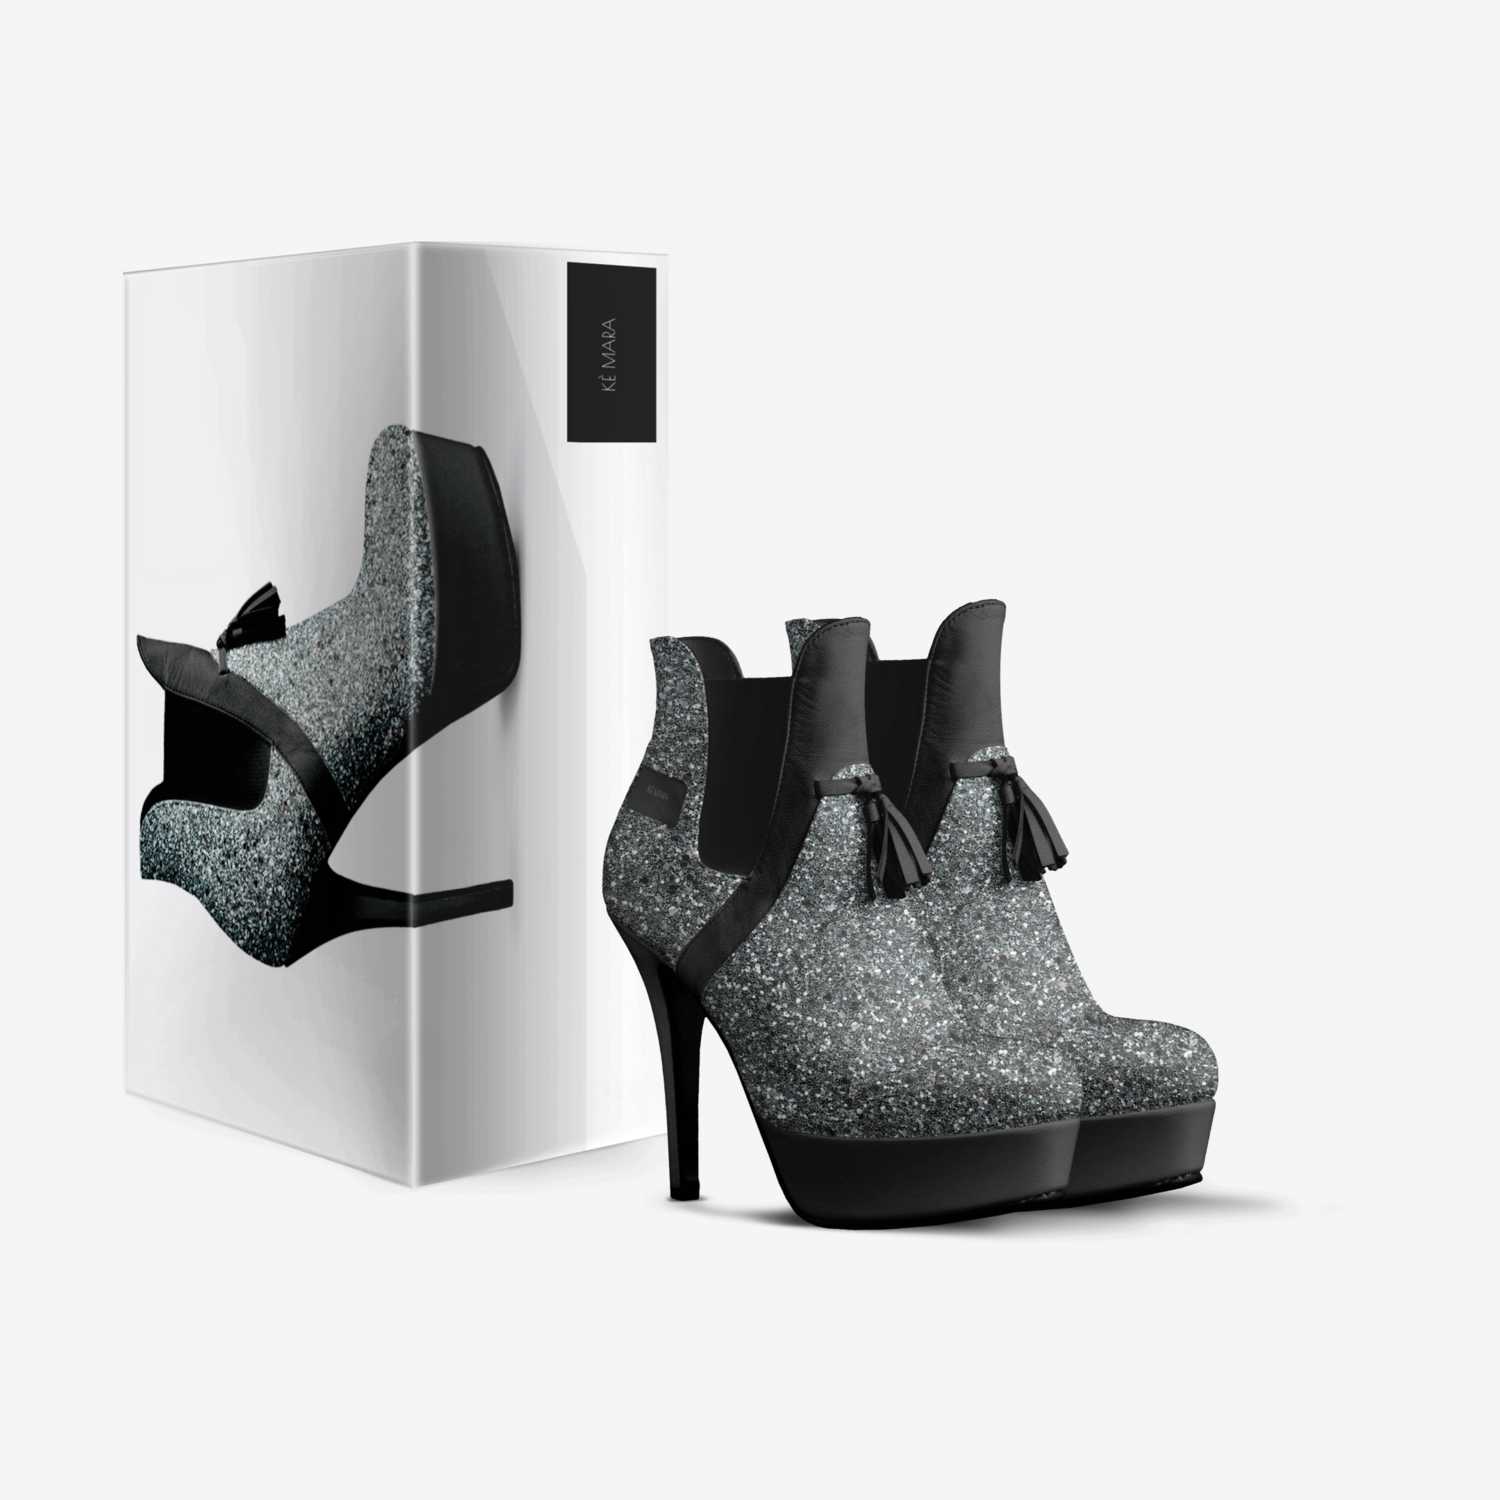 KÈ MARA custom made in Italy shoes by Marvin Church | Box view